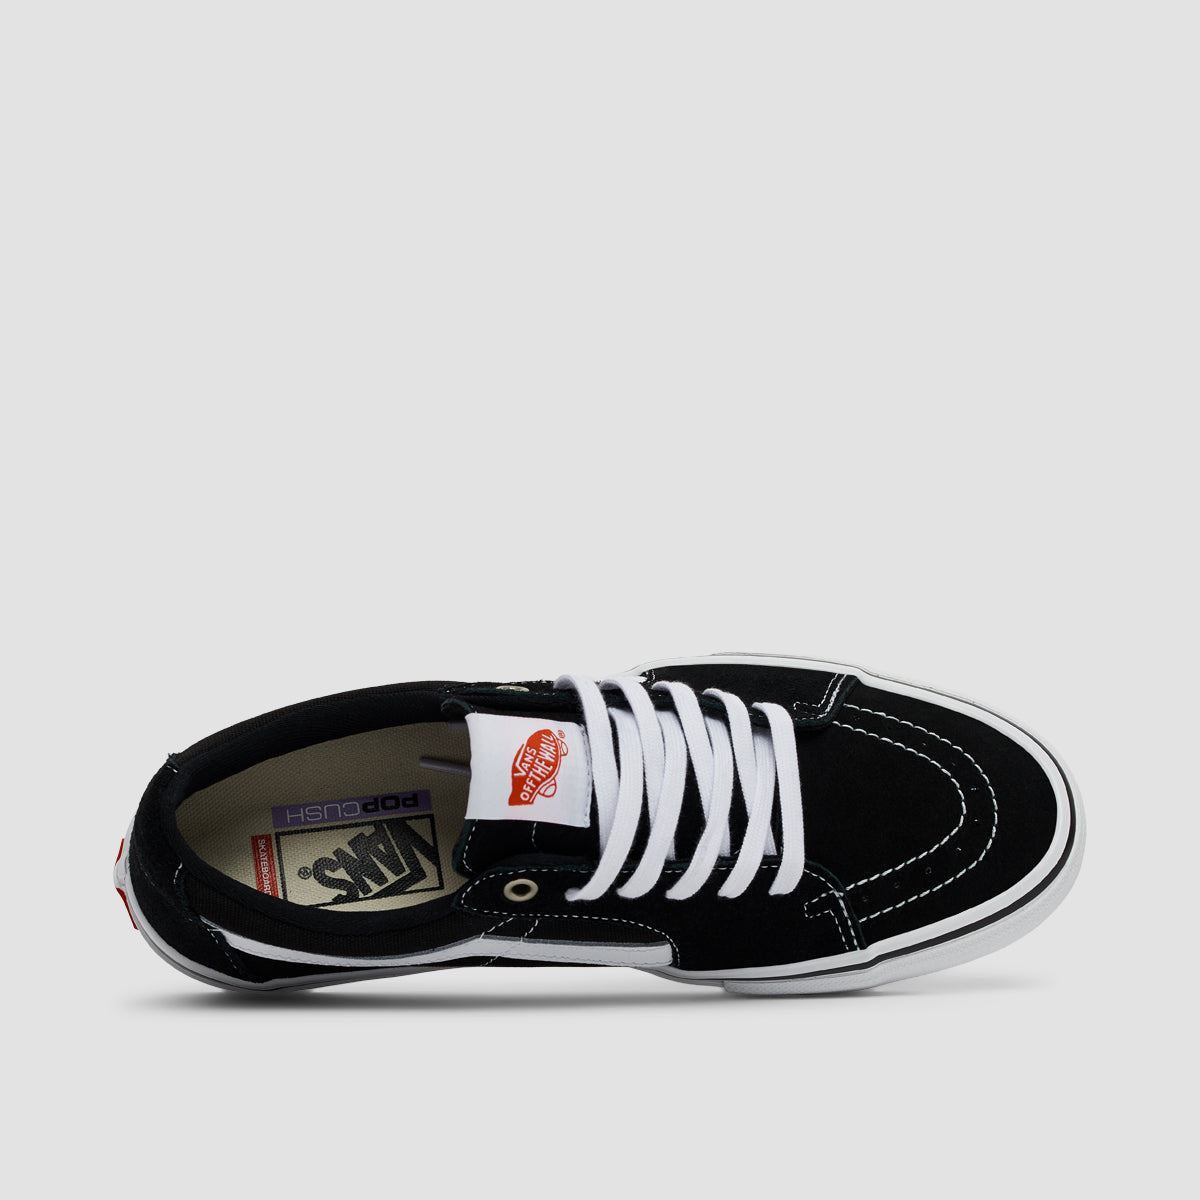 Vans Skate SK8-Low Shoes - Black/White